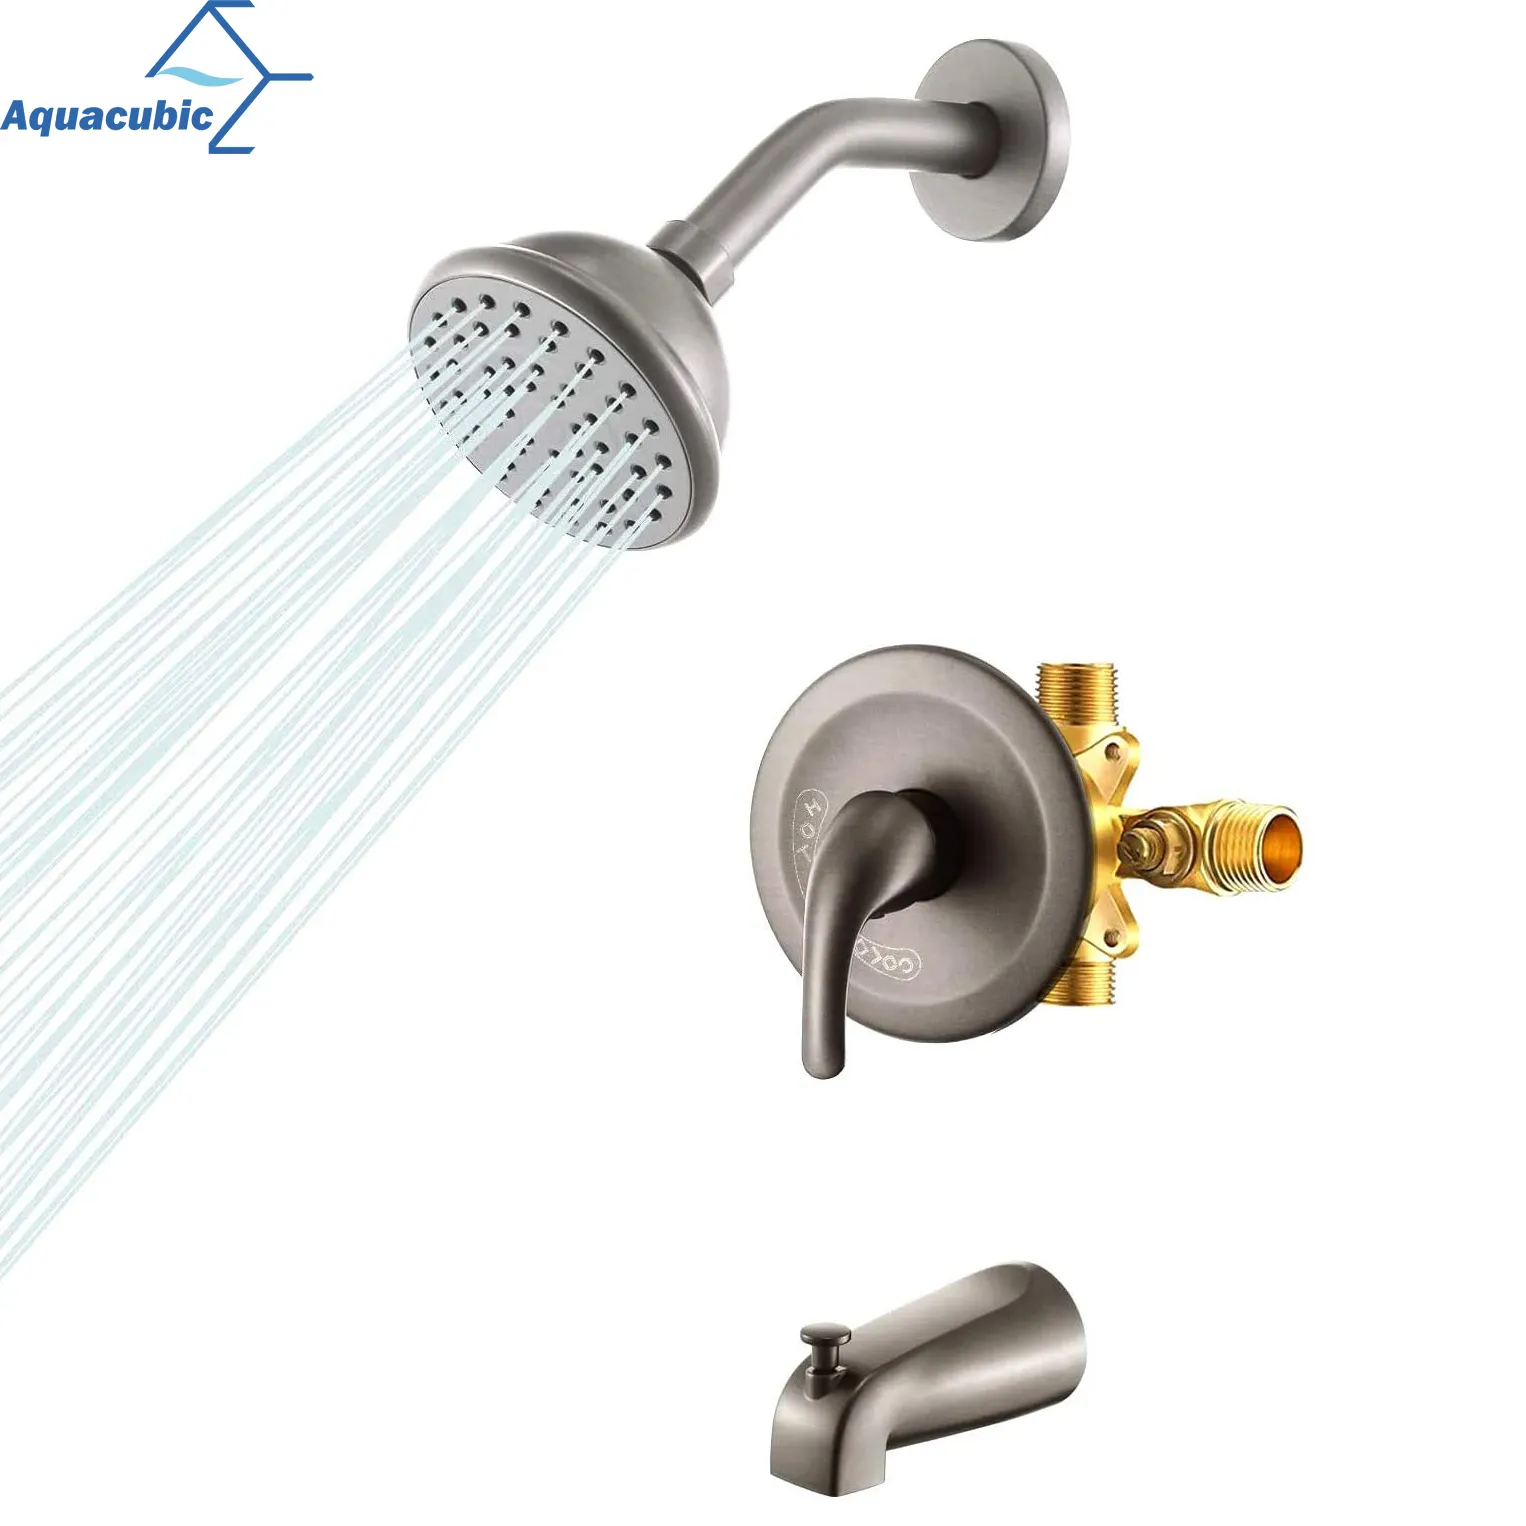 Aquacubic Shower Faucet Set Brushed Nickel Shower and Tub Trim Kit Single Handle Bathroom Rain Shower System